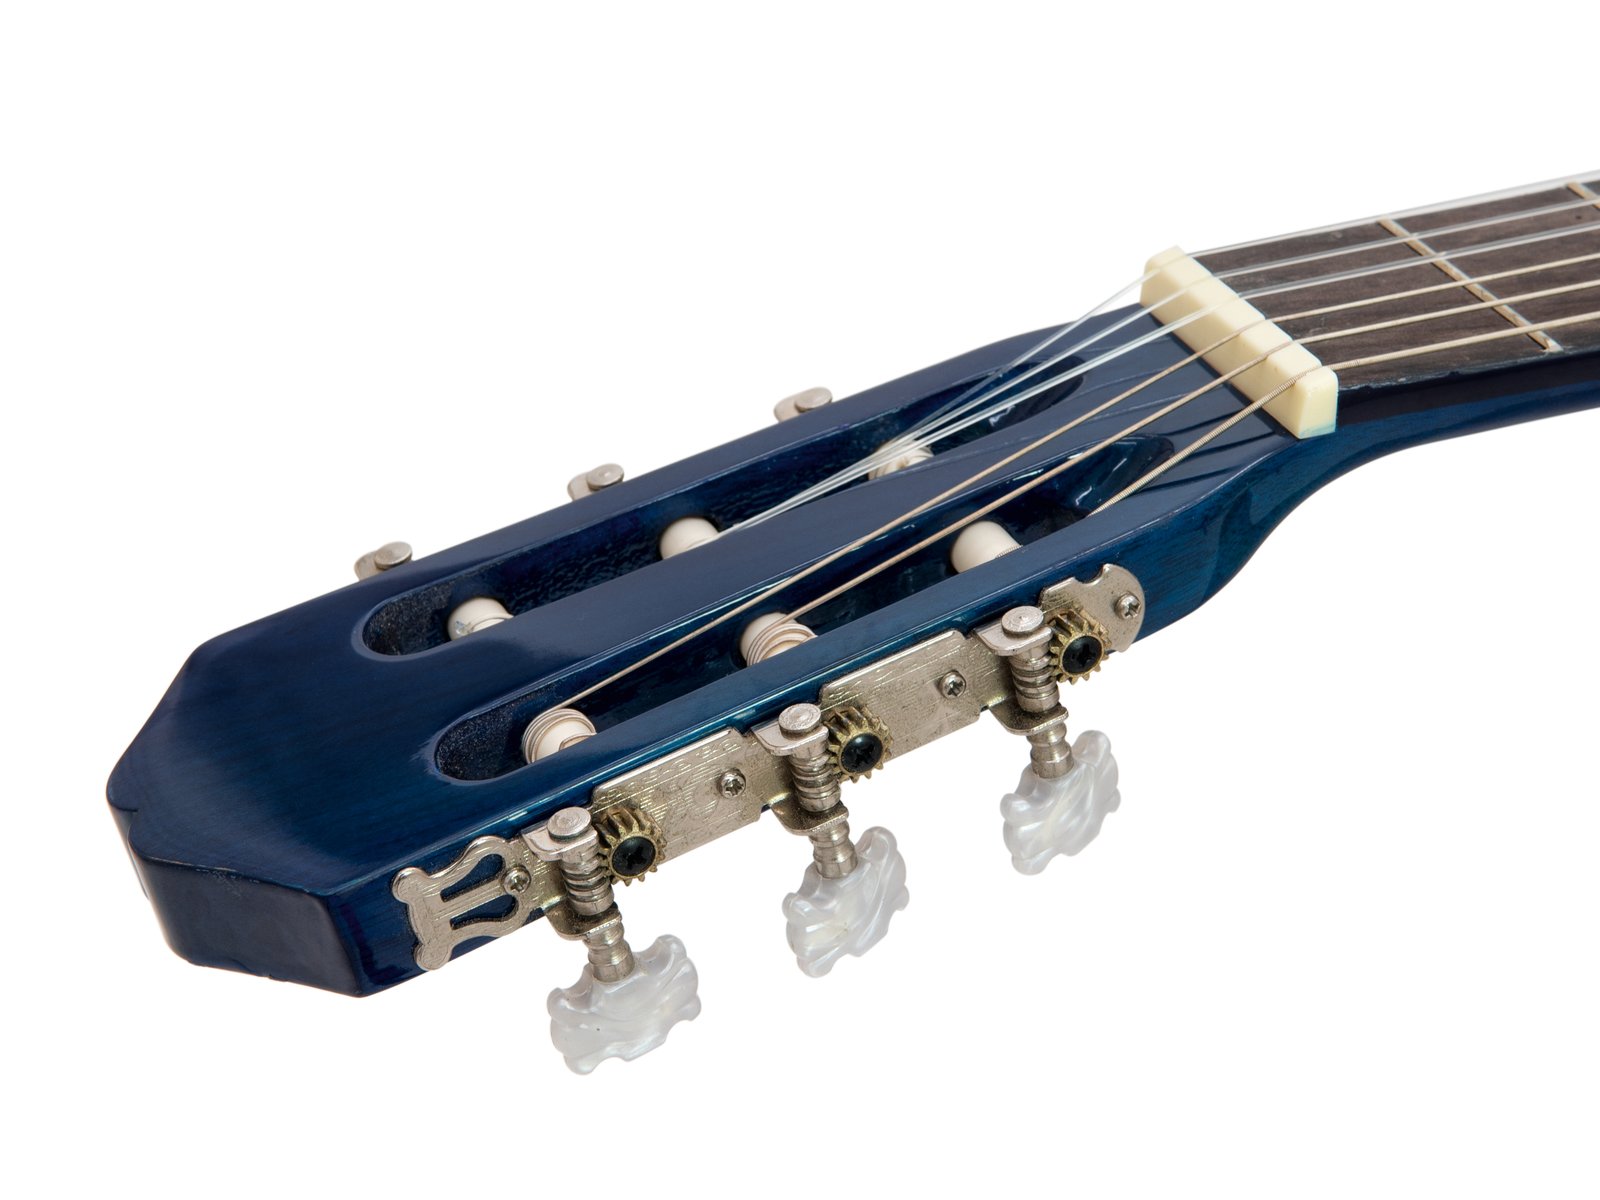 DIMAVERY AC-303 Klassikgitarre, blueburst